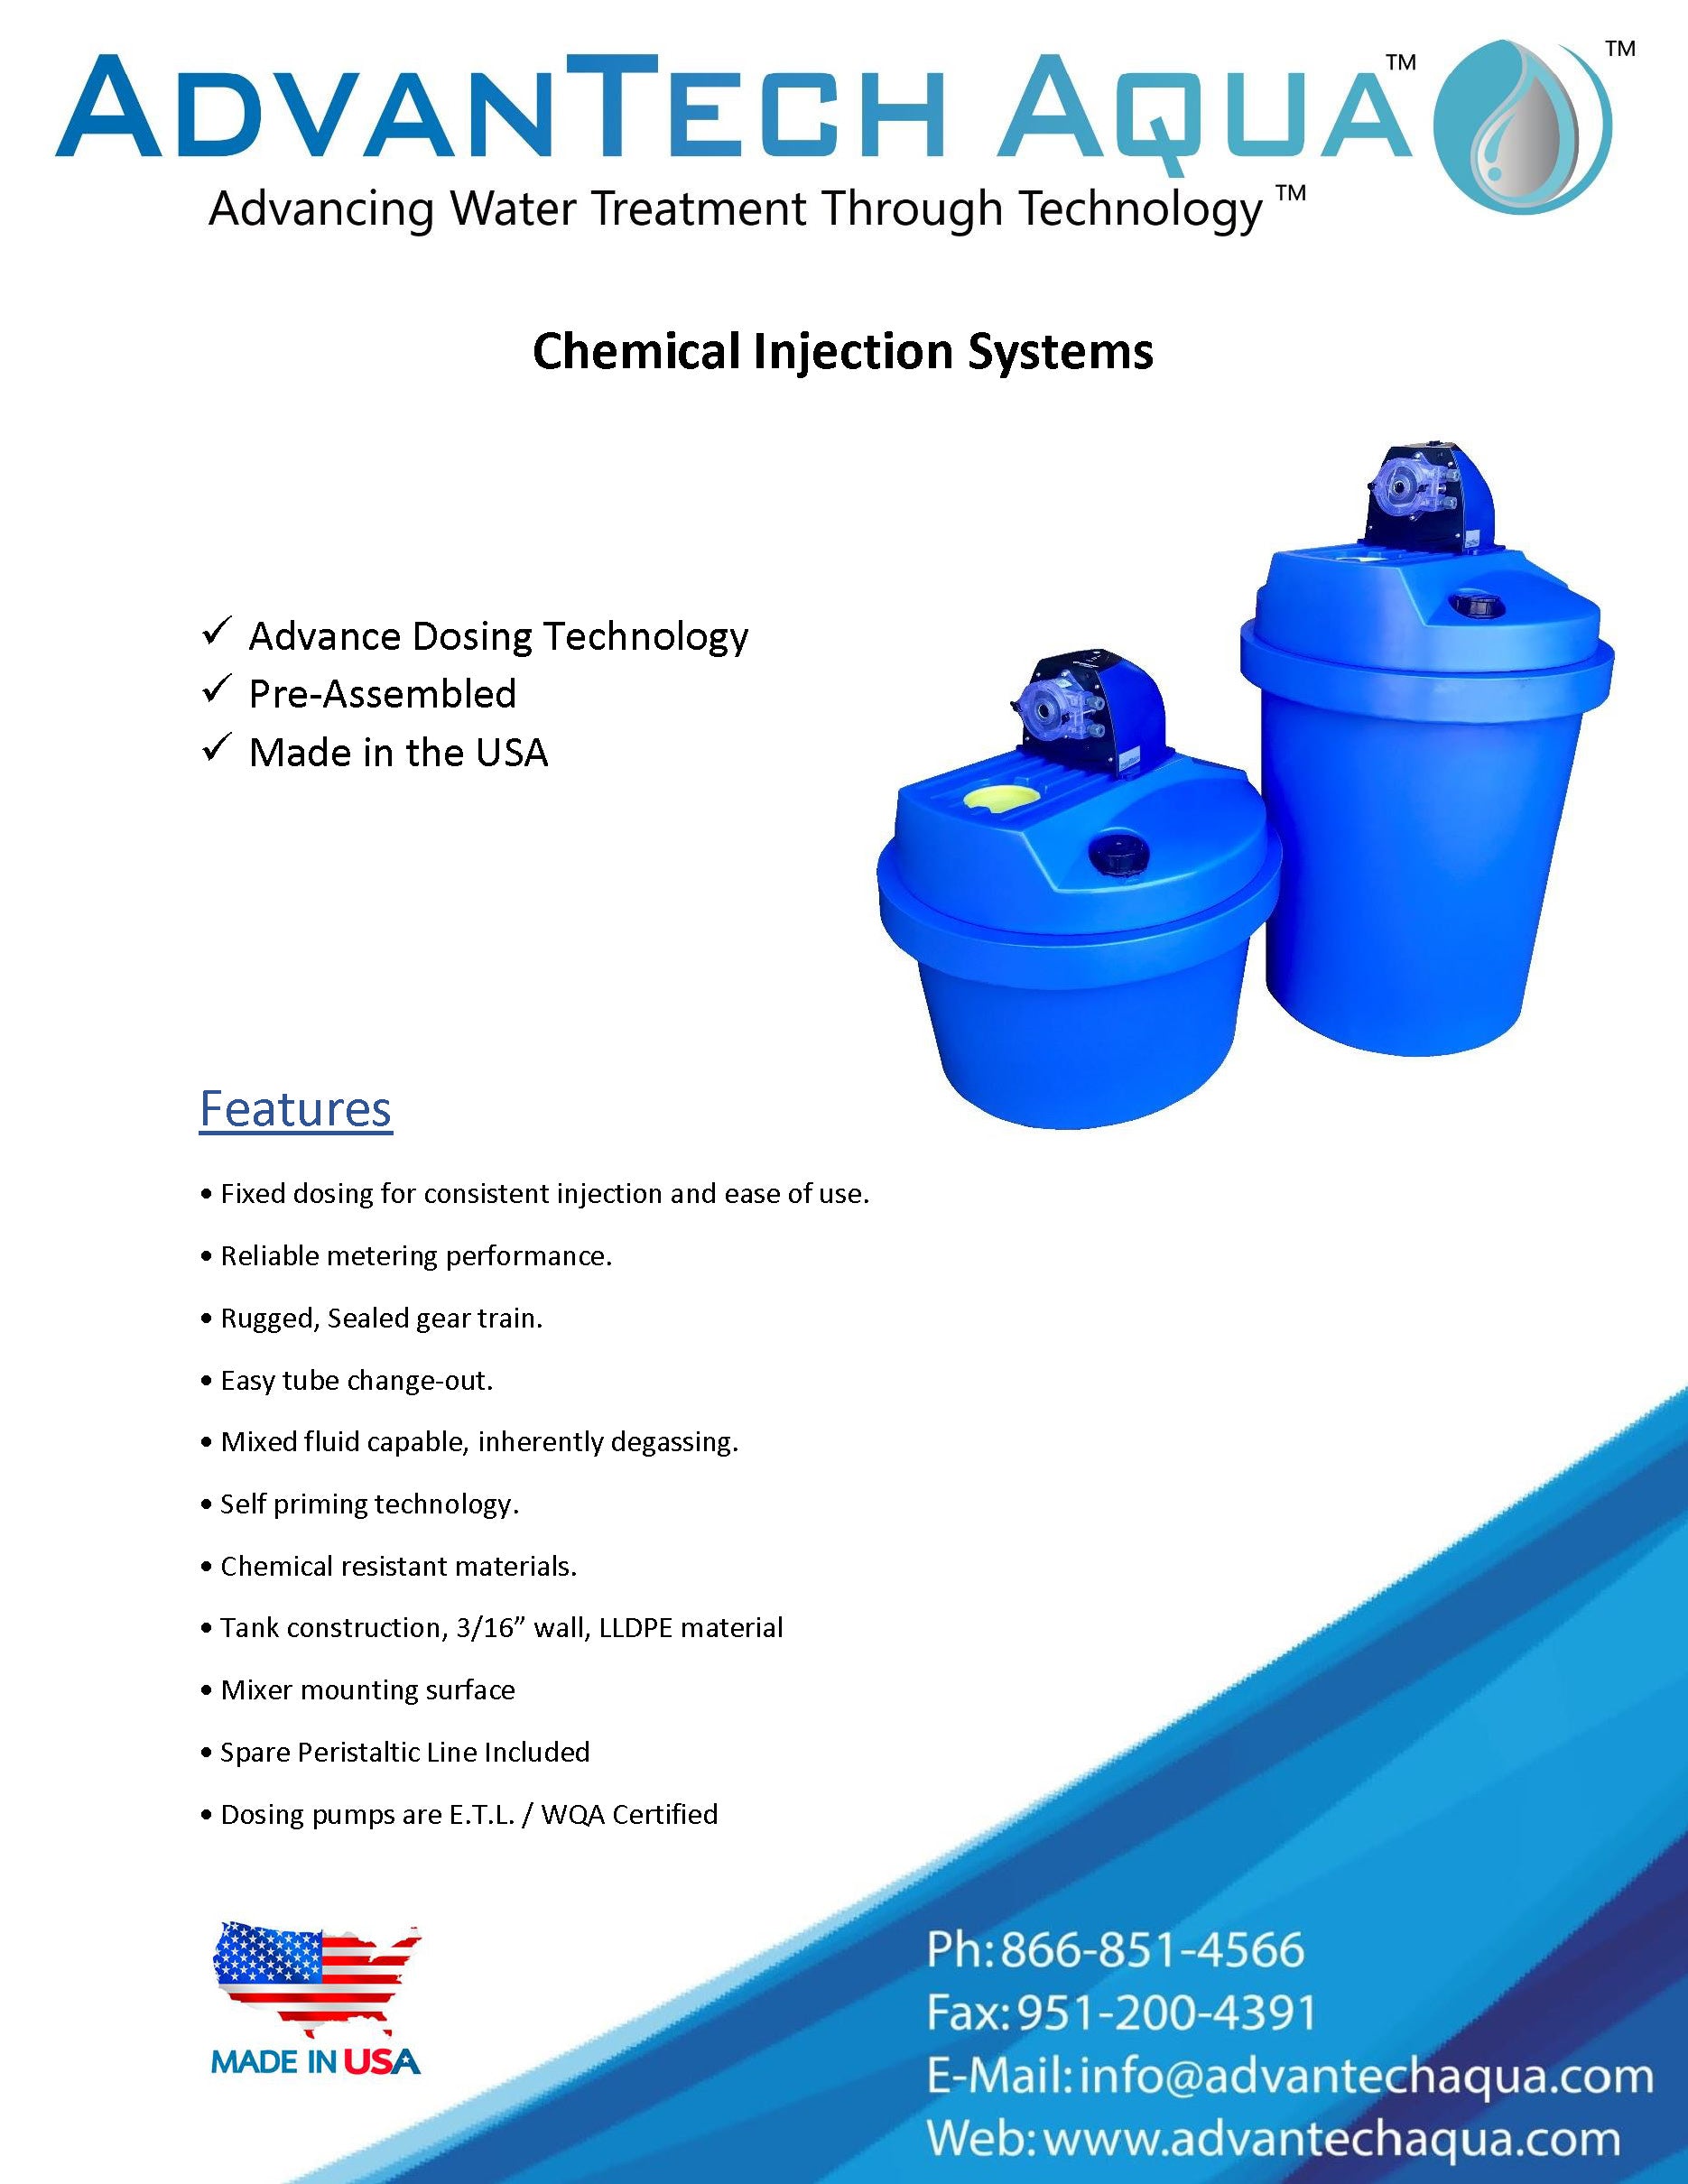 ADVANTECH Aqua Chemical Injection System